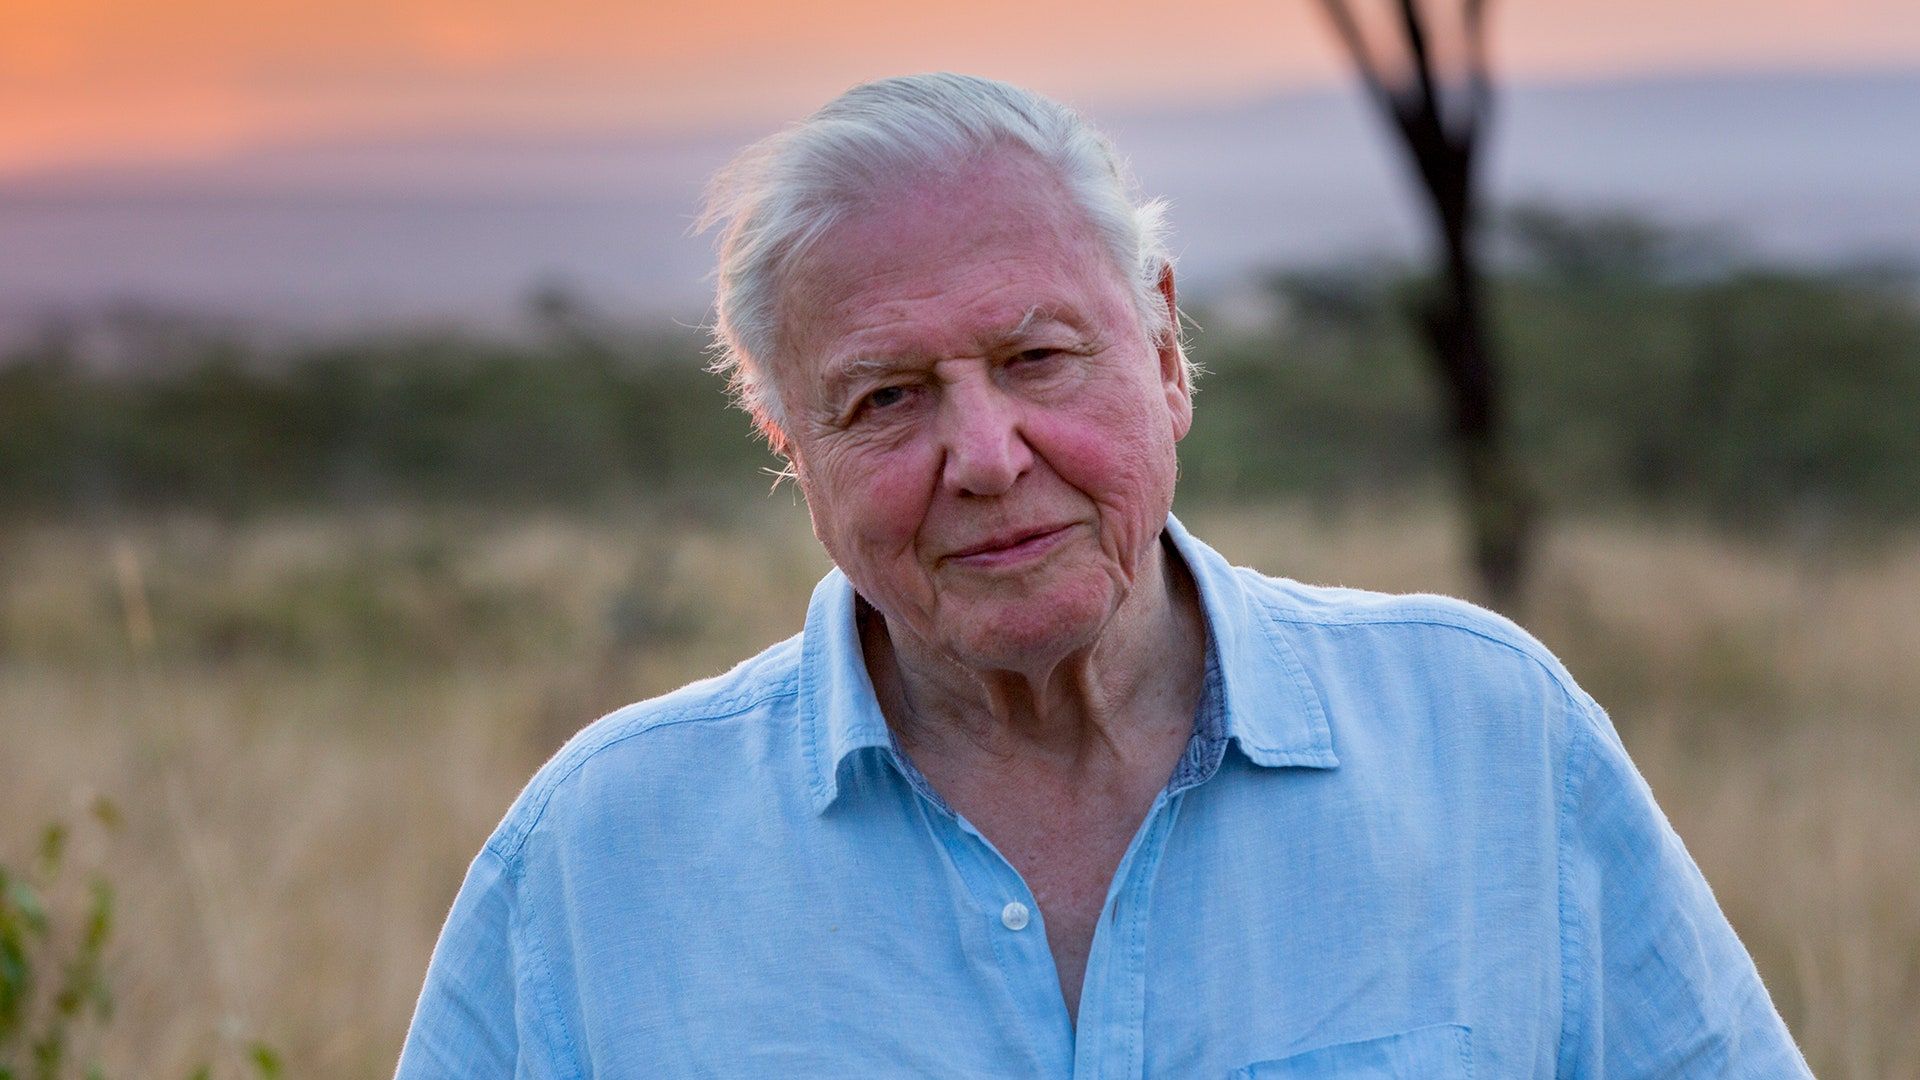 The new David Attenborough film has been postponed